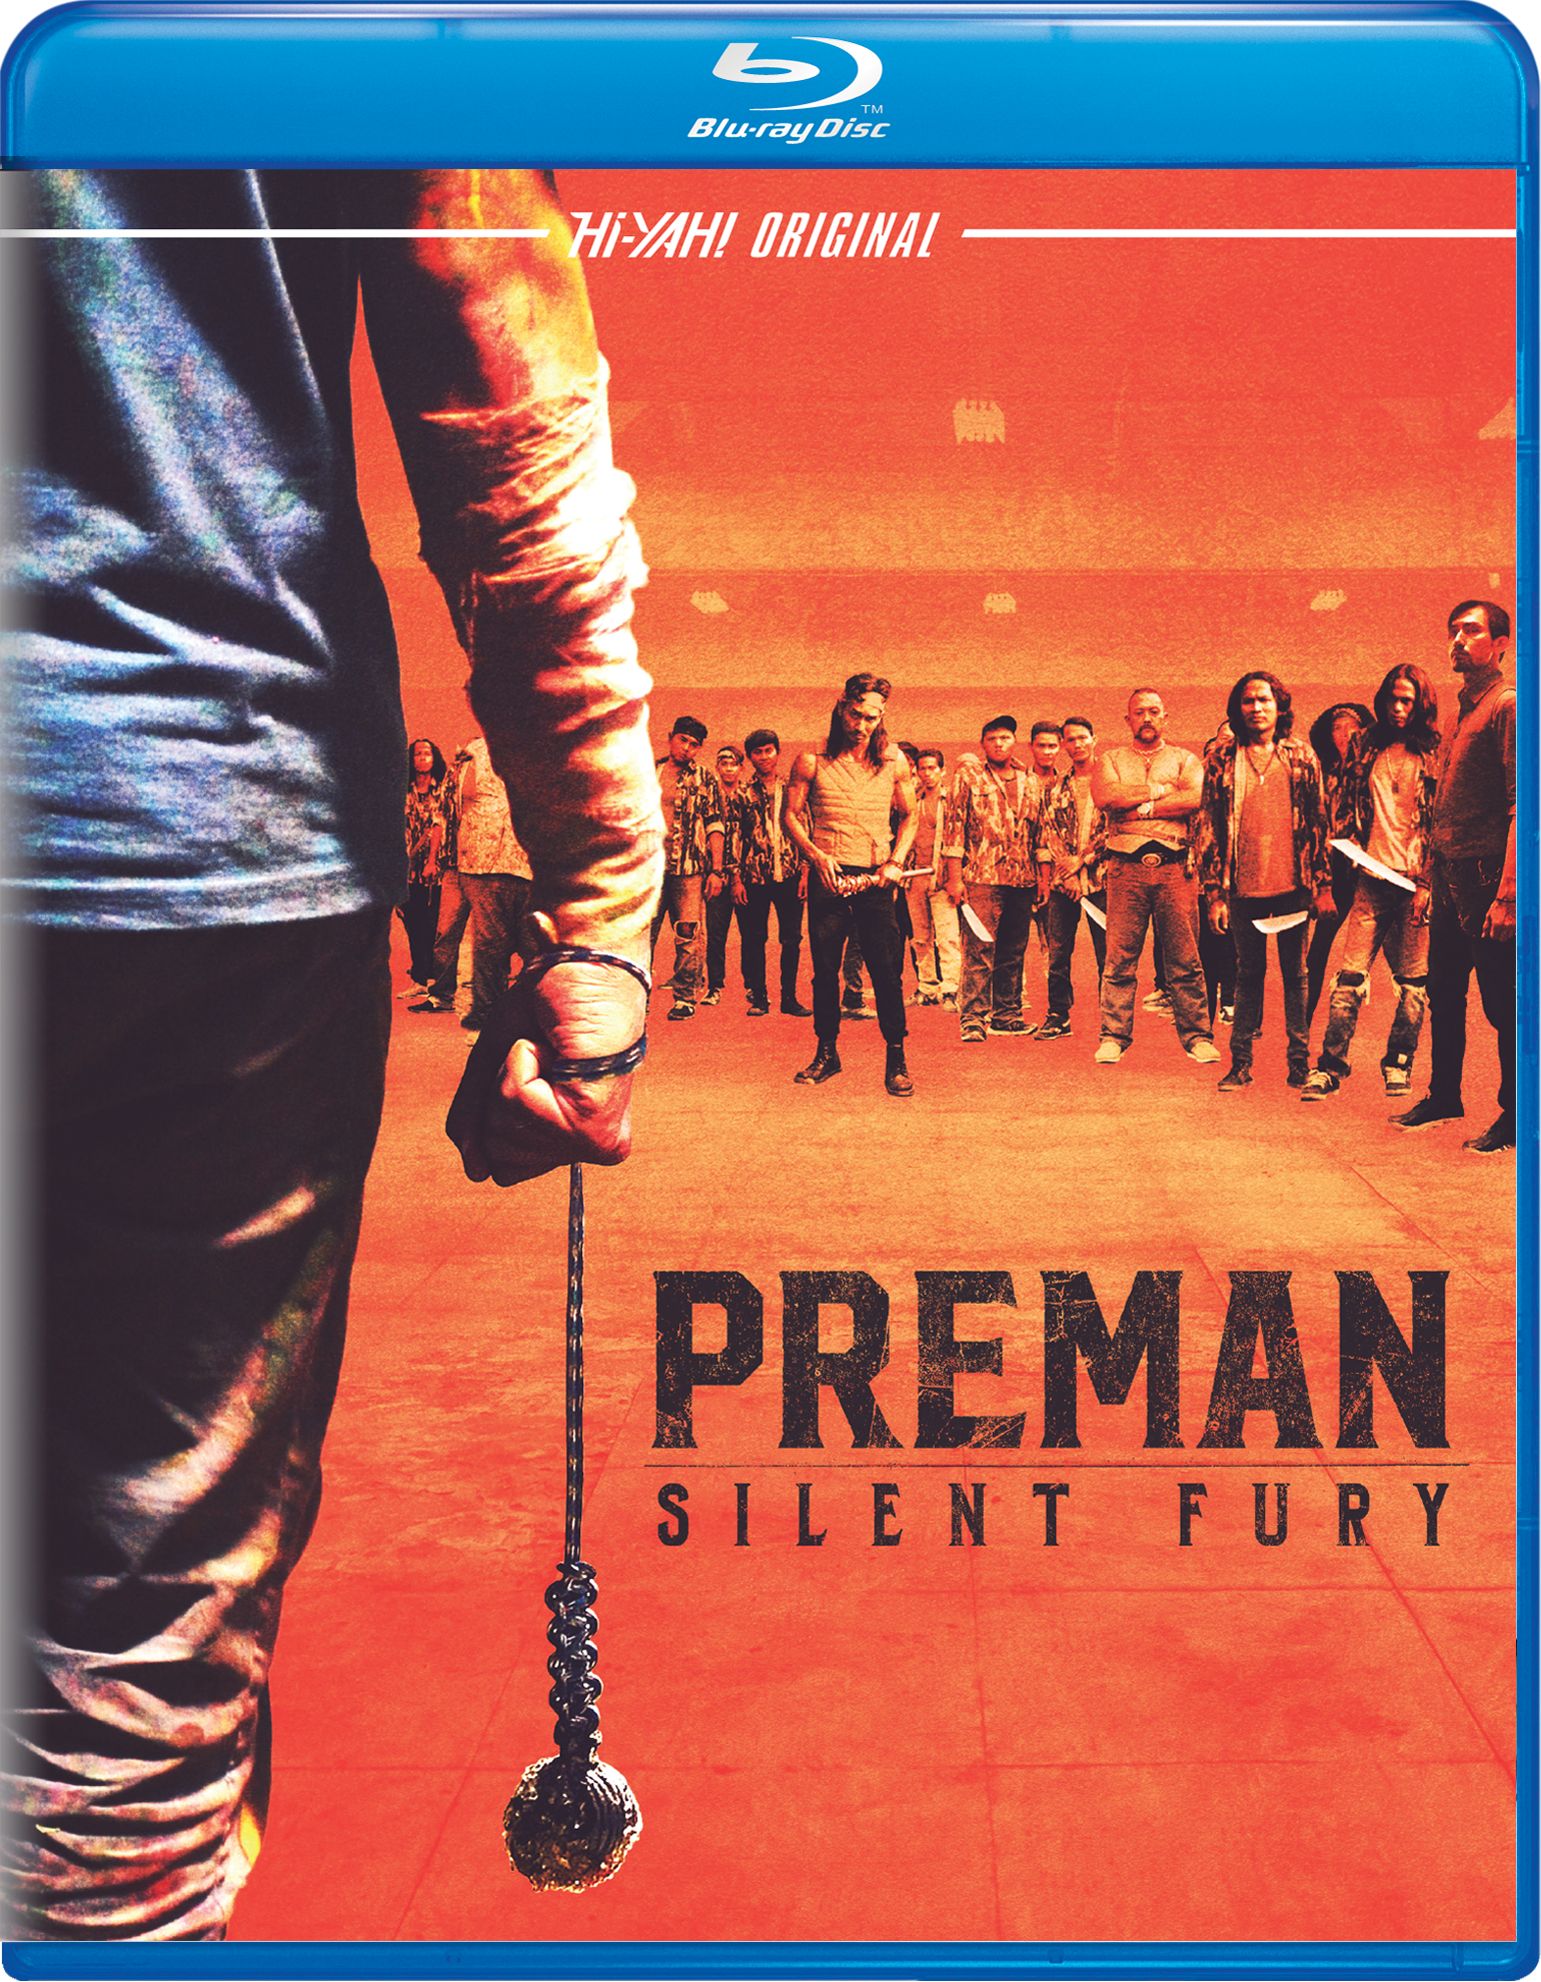 Preman: Silent Fury - Blu-ray [ 2021 ]  - Foreign Movies On Blu-ray - Movies On GRUV